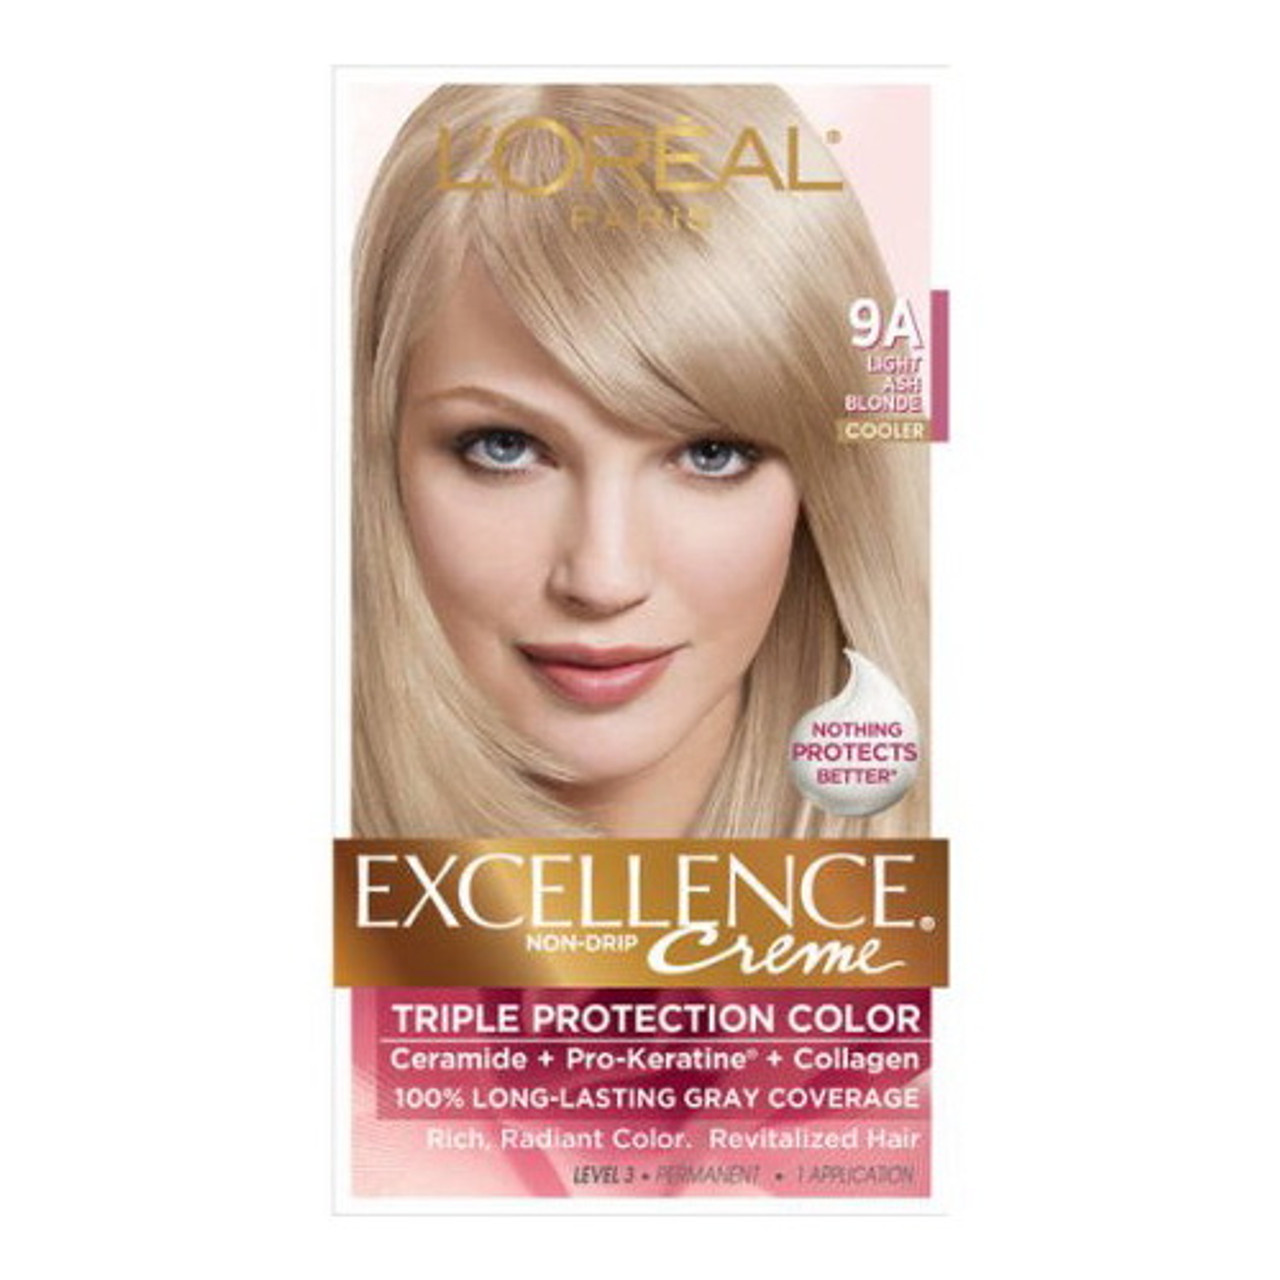 Loreal Excellence Triple Protection Hair Color Creme, 9A Light Ash Blonde -  1 Ea 